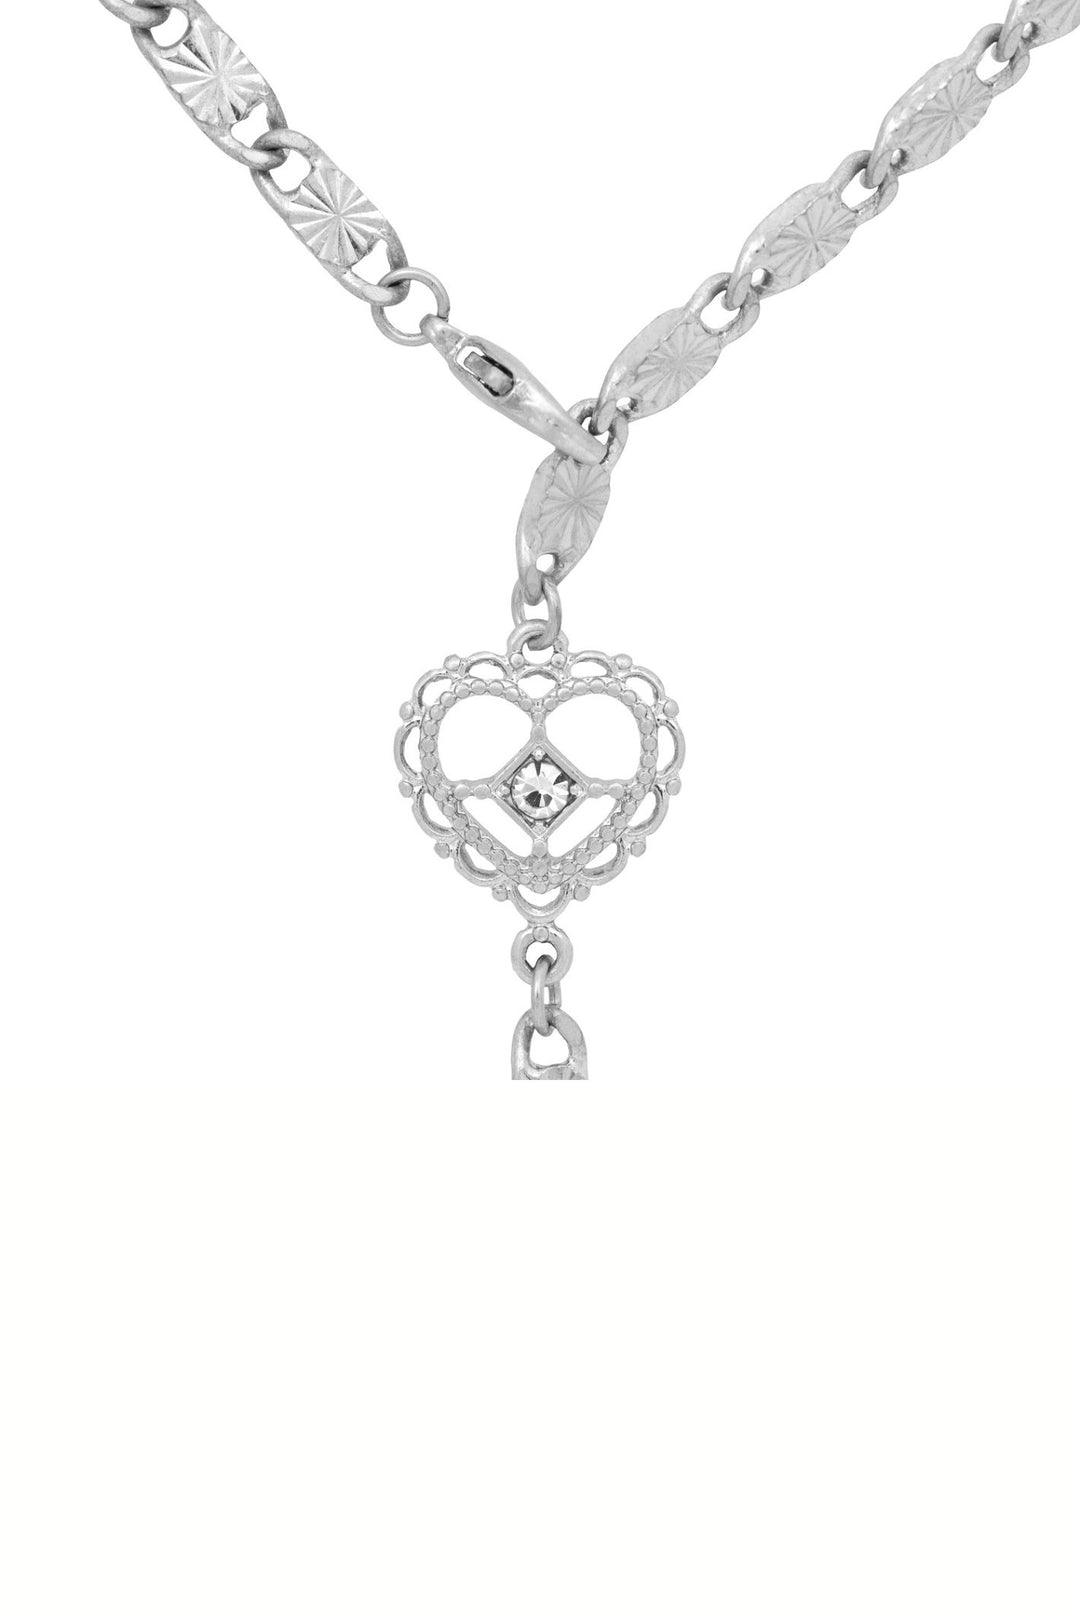 Bibi Bijoux Silver Heart Charm Necklace